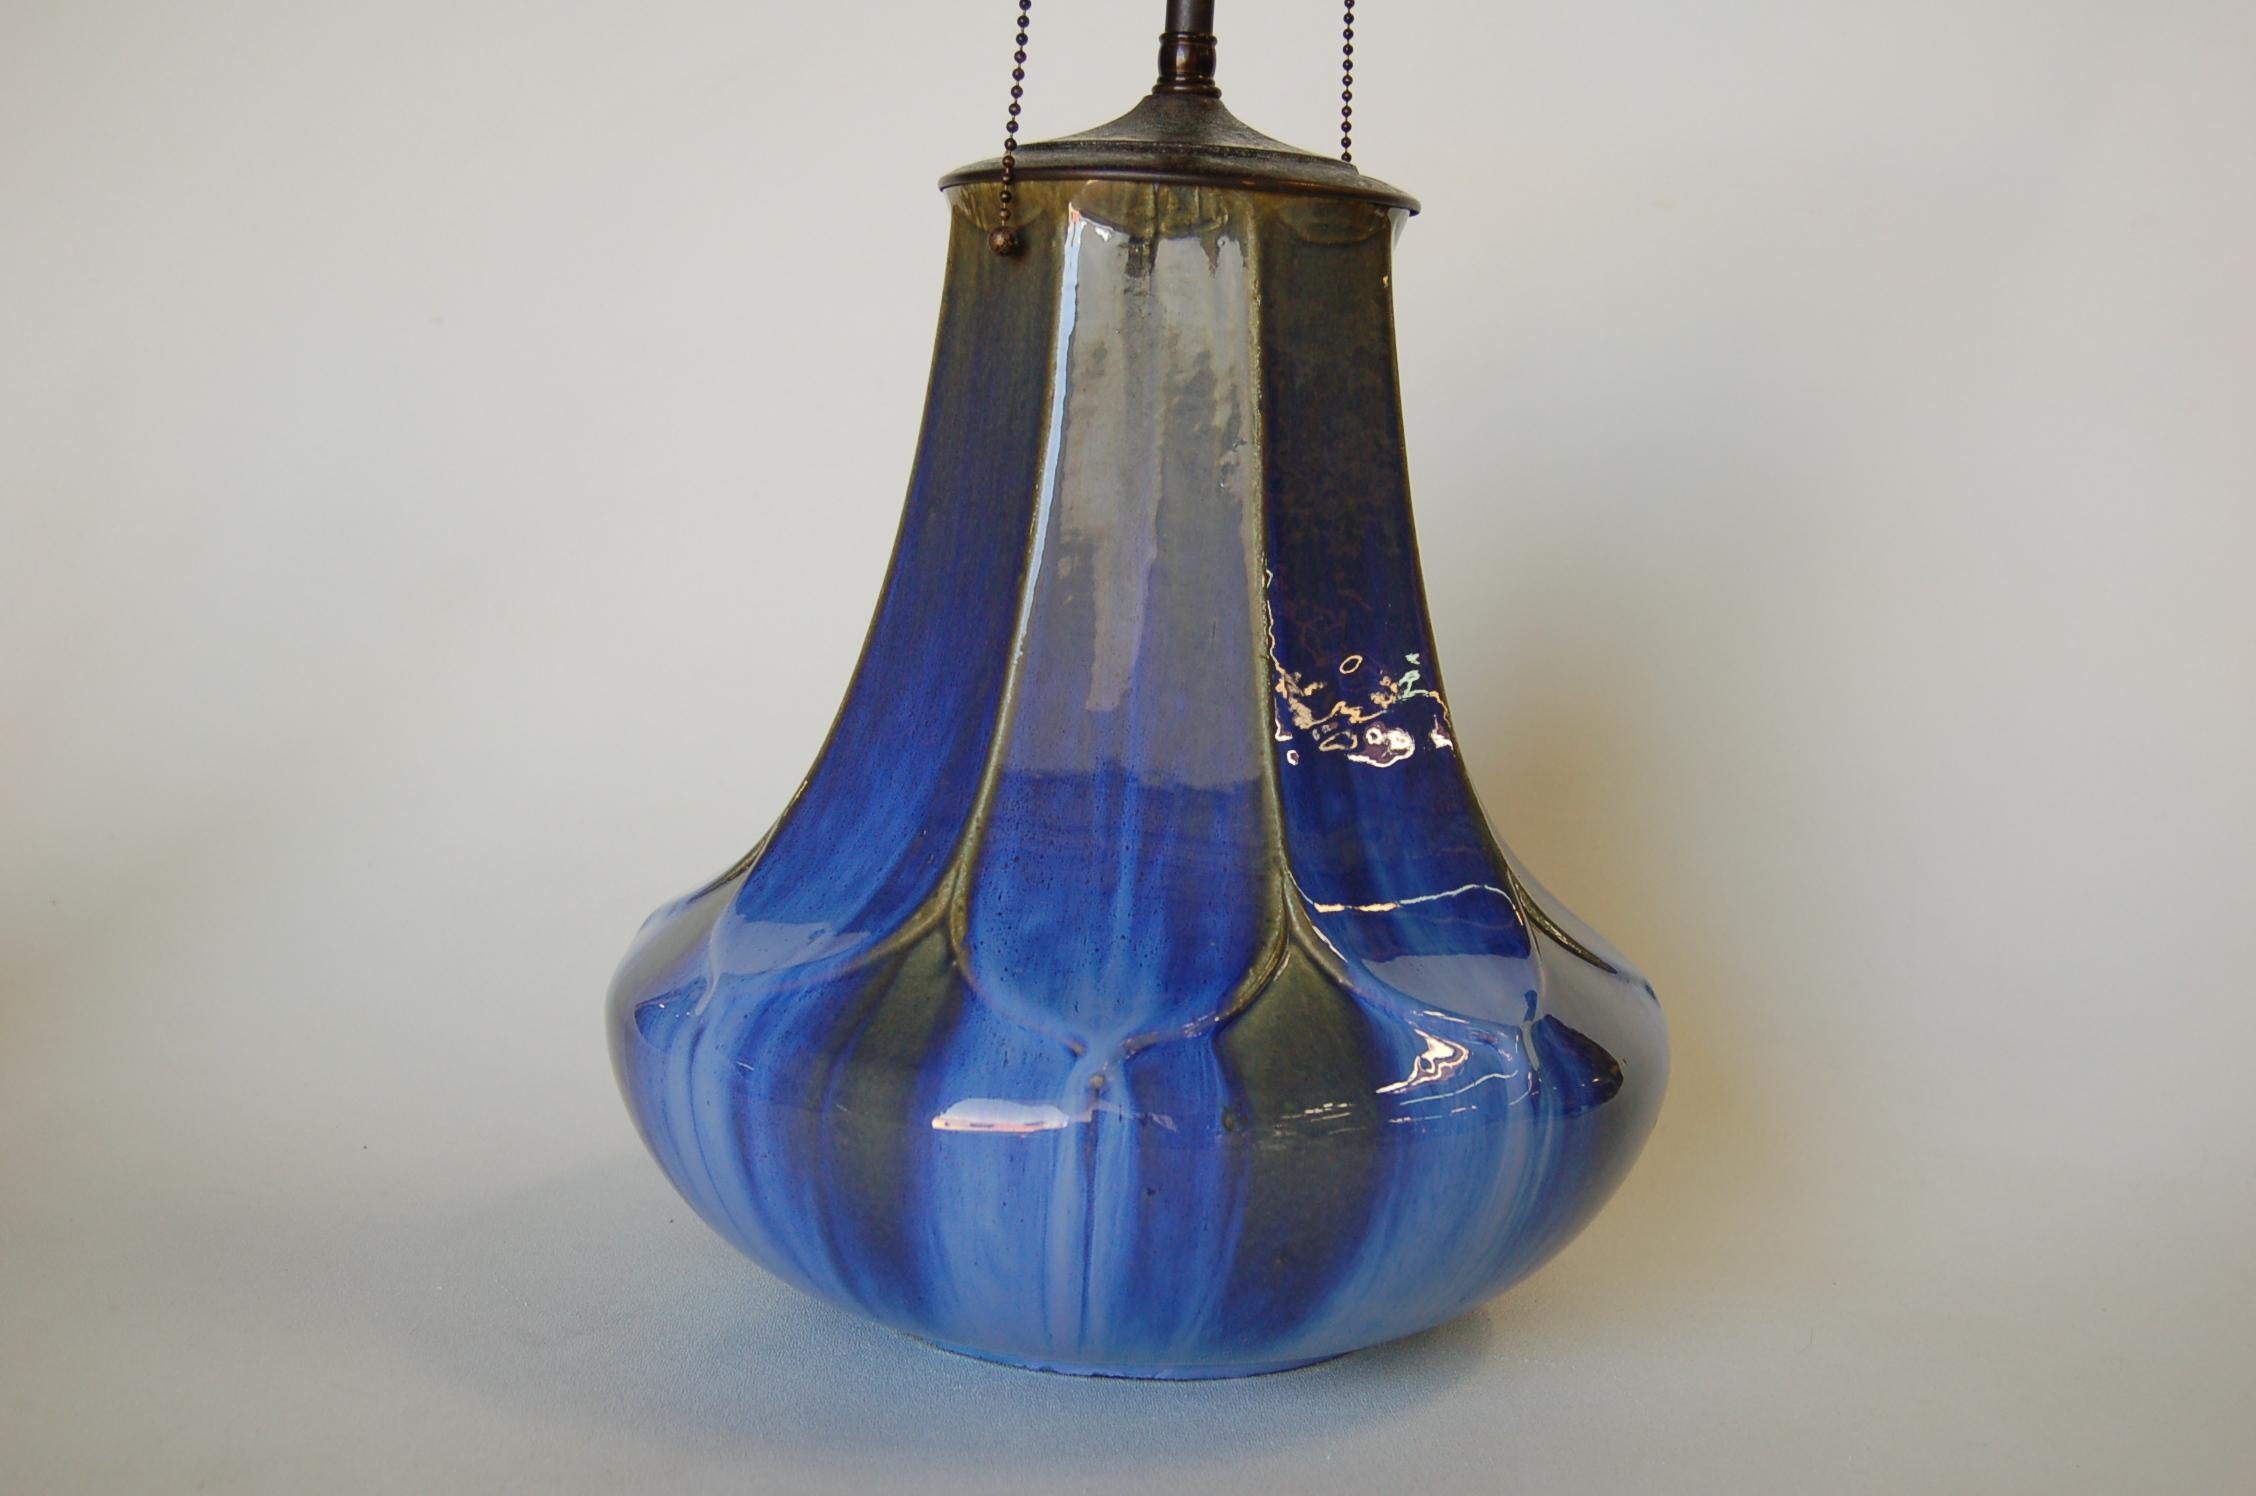 Art Deco Art Nouveau Fulper Style Pottery Artichoke Taple Lamp W/ Bronze Hardware For Sale